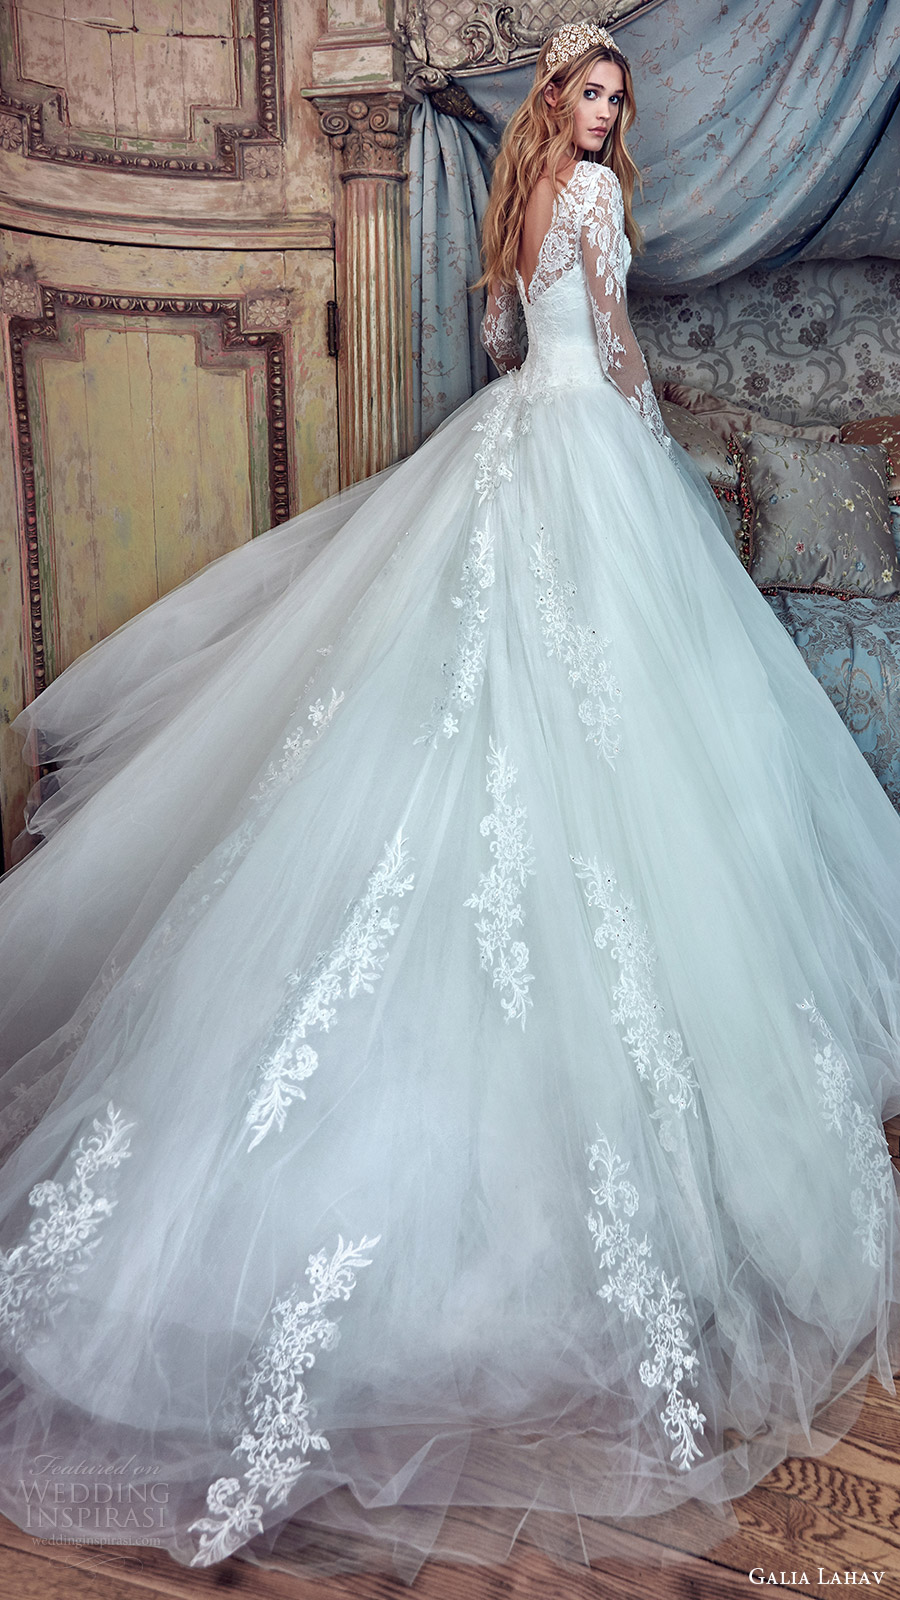 Galia Lahav Spring 2017 Couture Wedding Dresses — “Le 